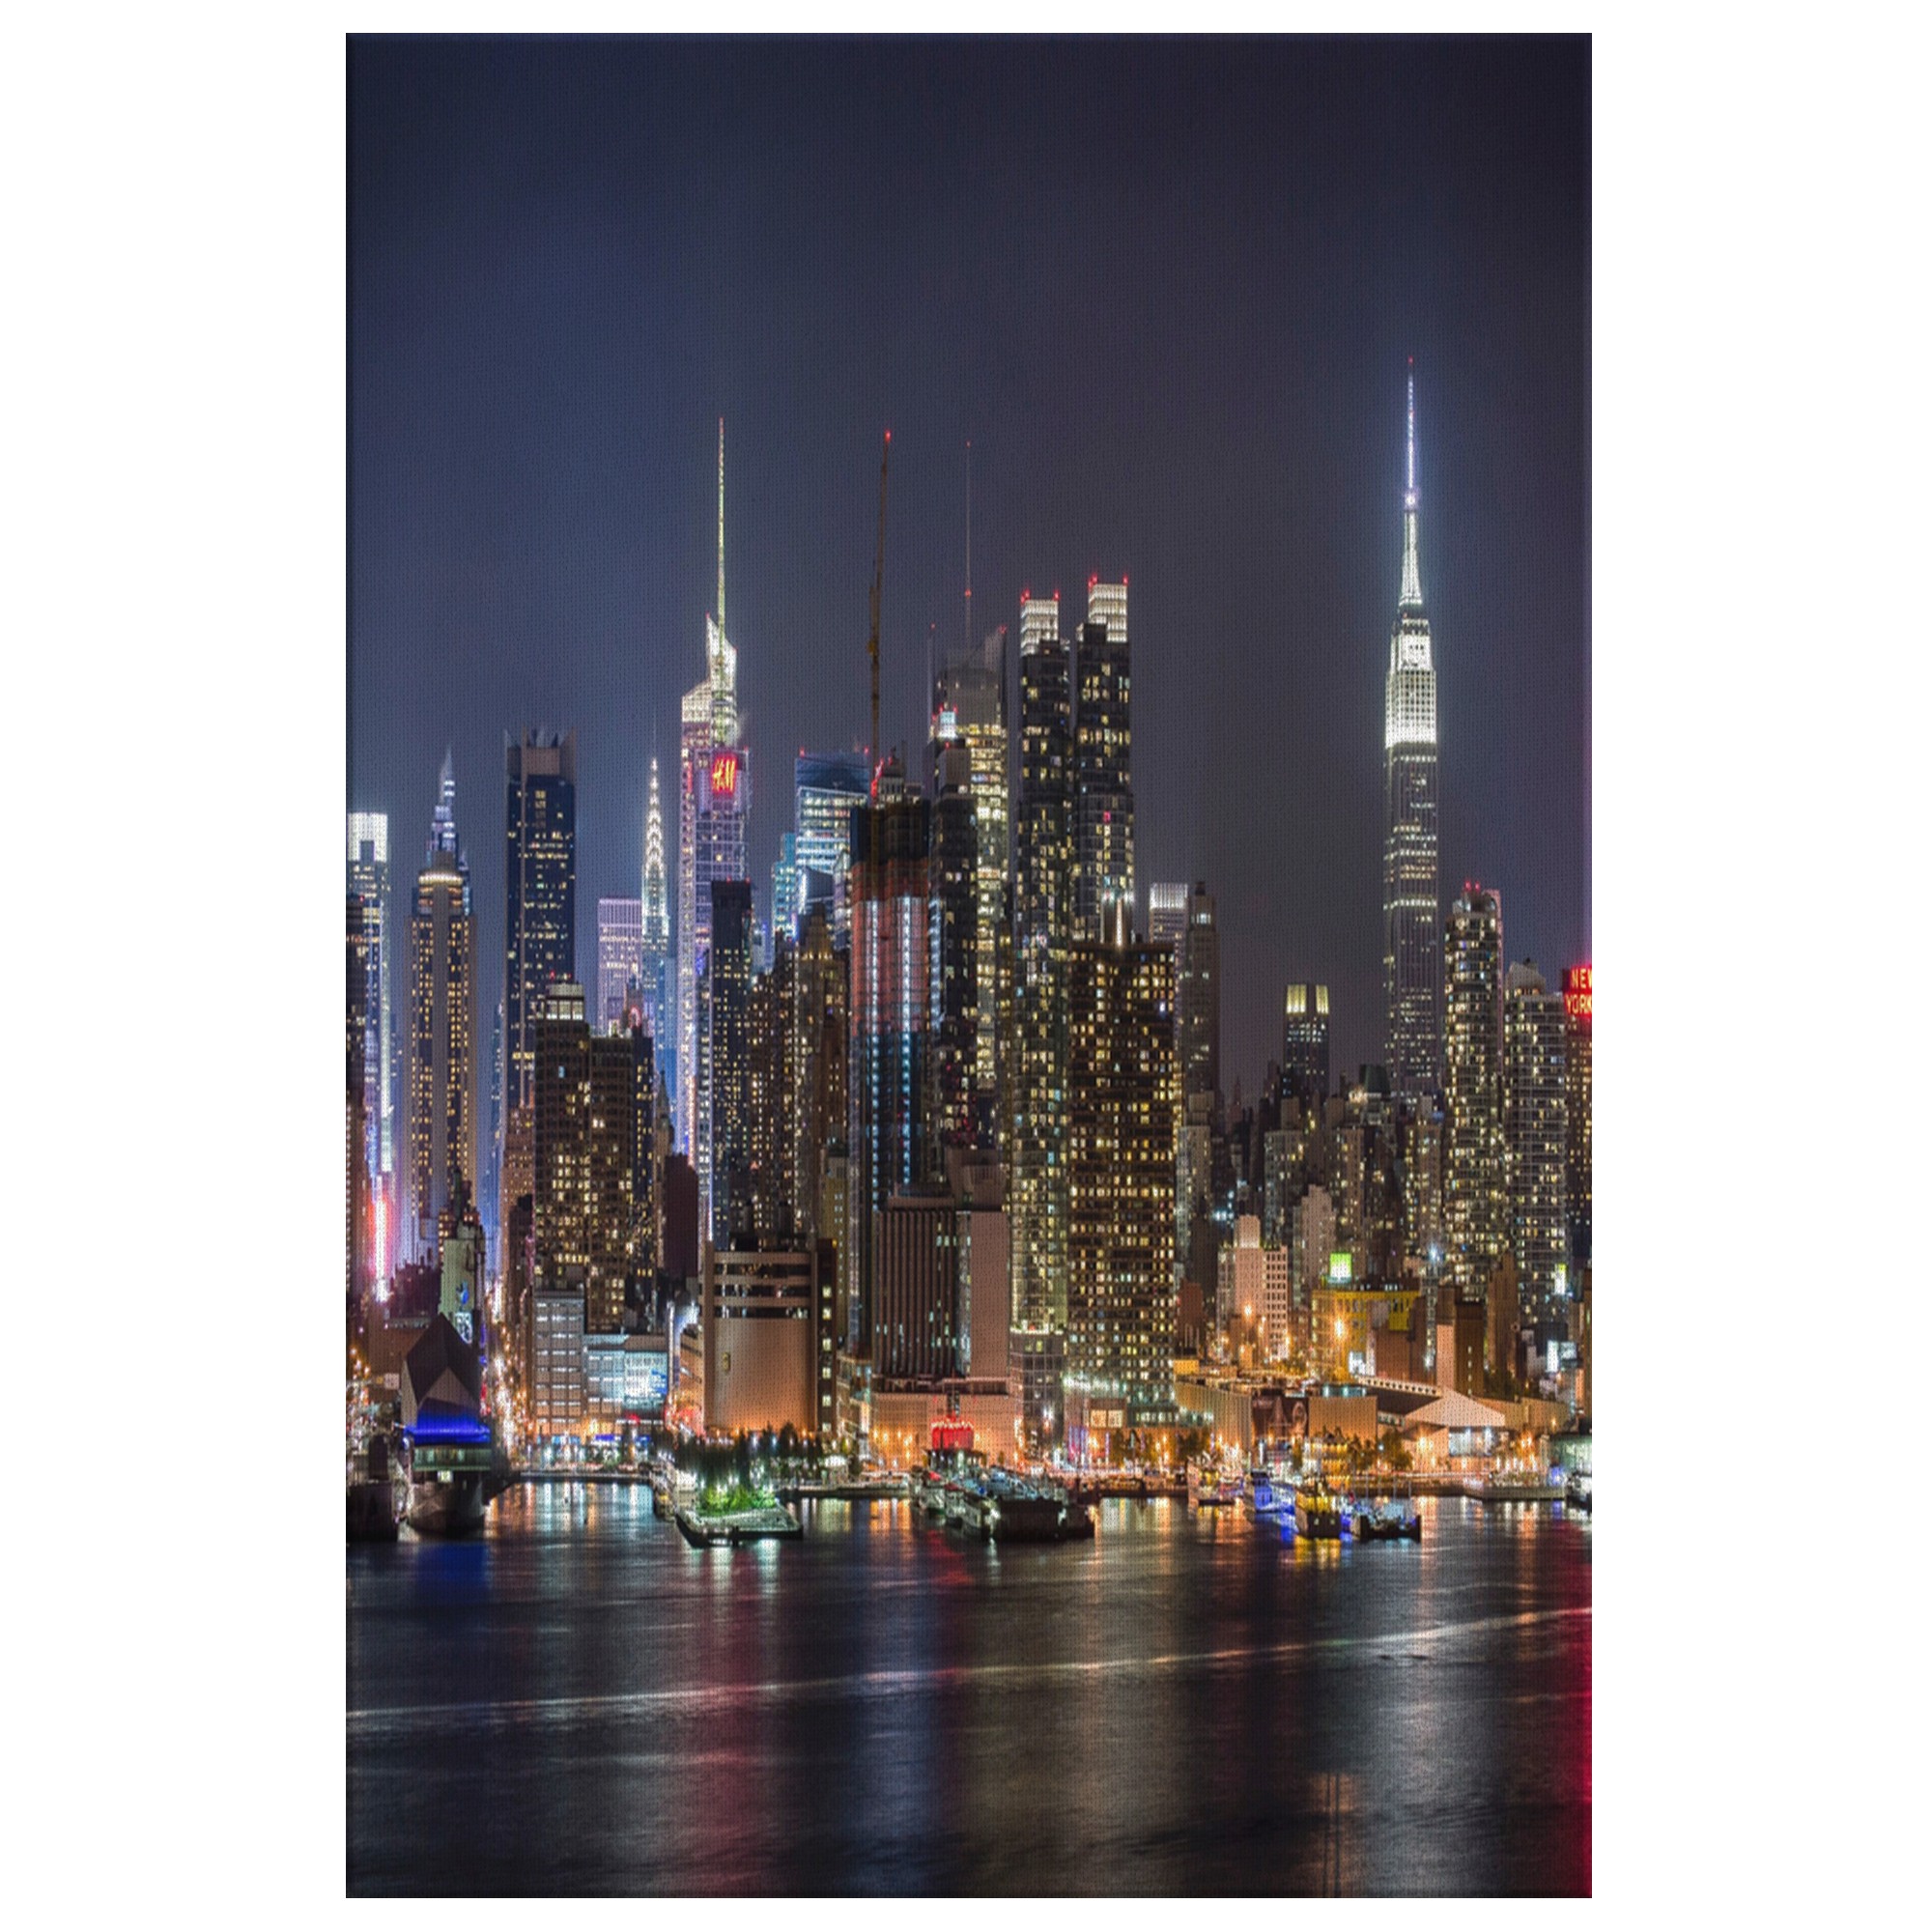 City Lights of New York City